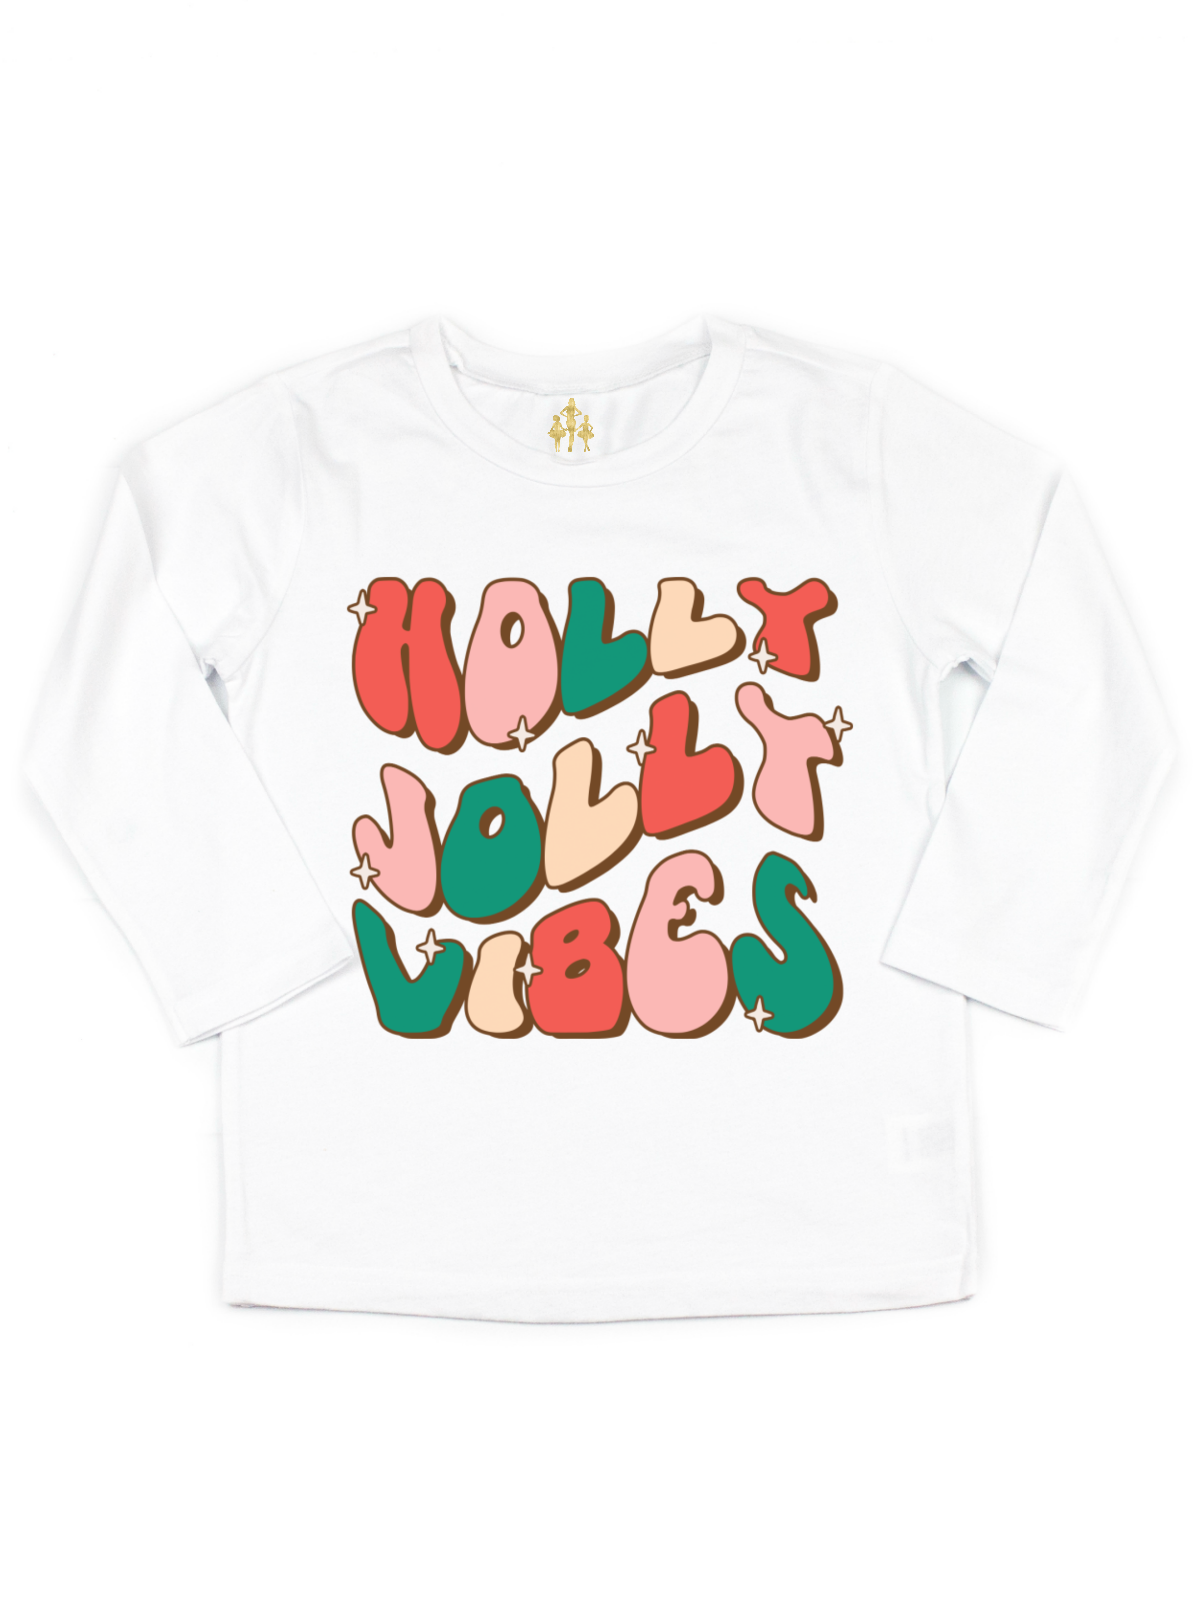 Holly Jolly Vibes Kids Christmas Shirt